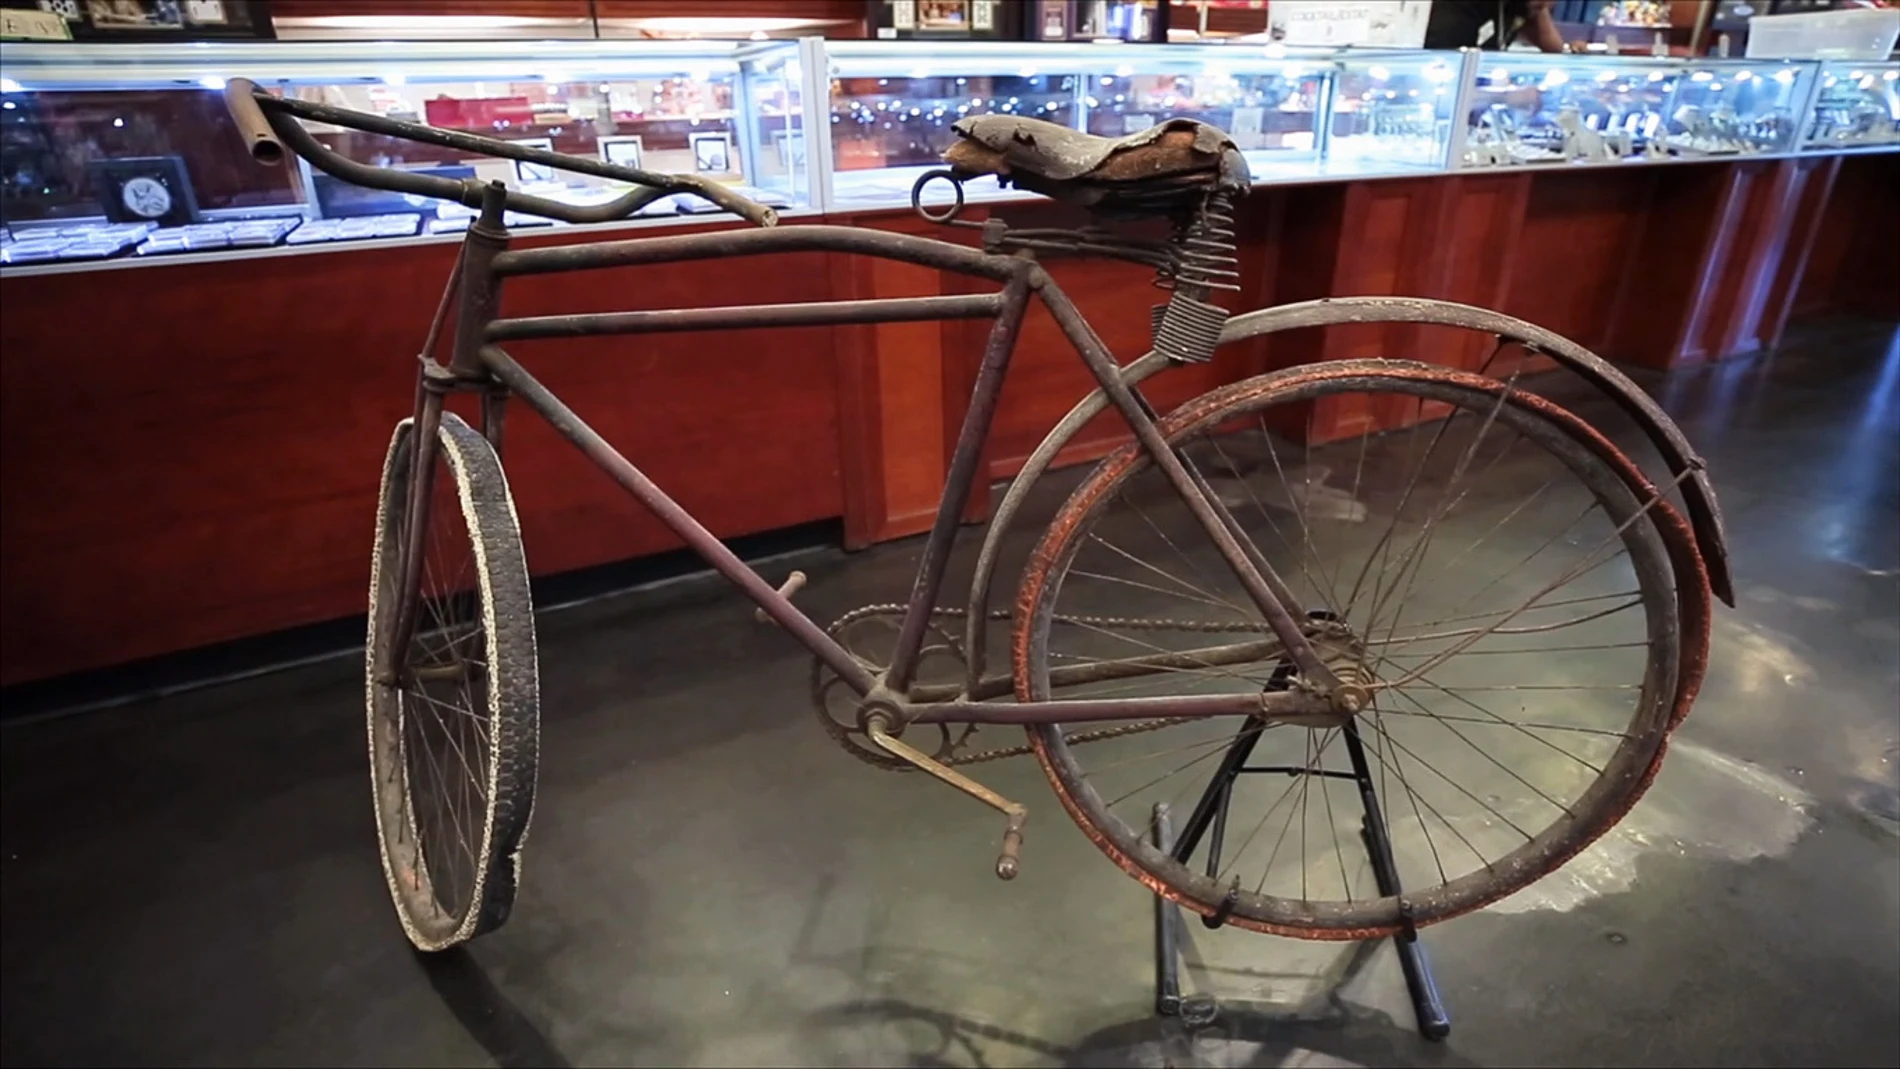 Una bici de 1900